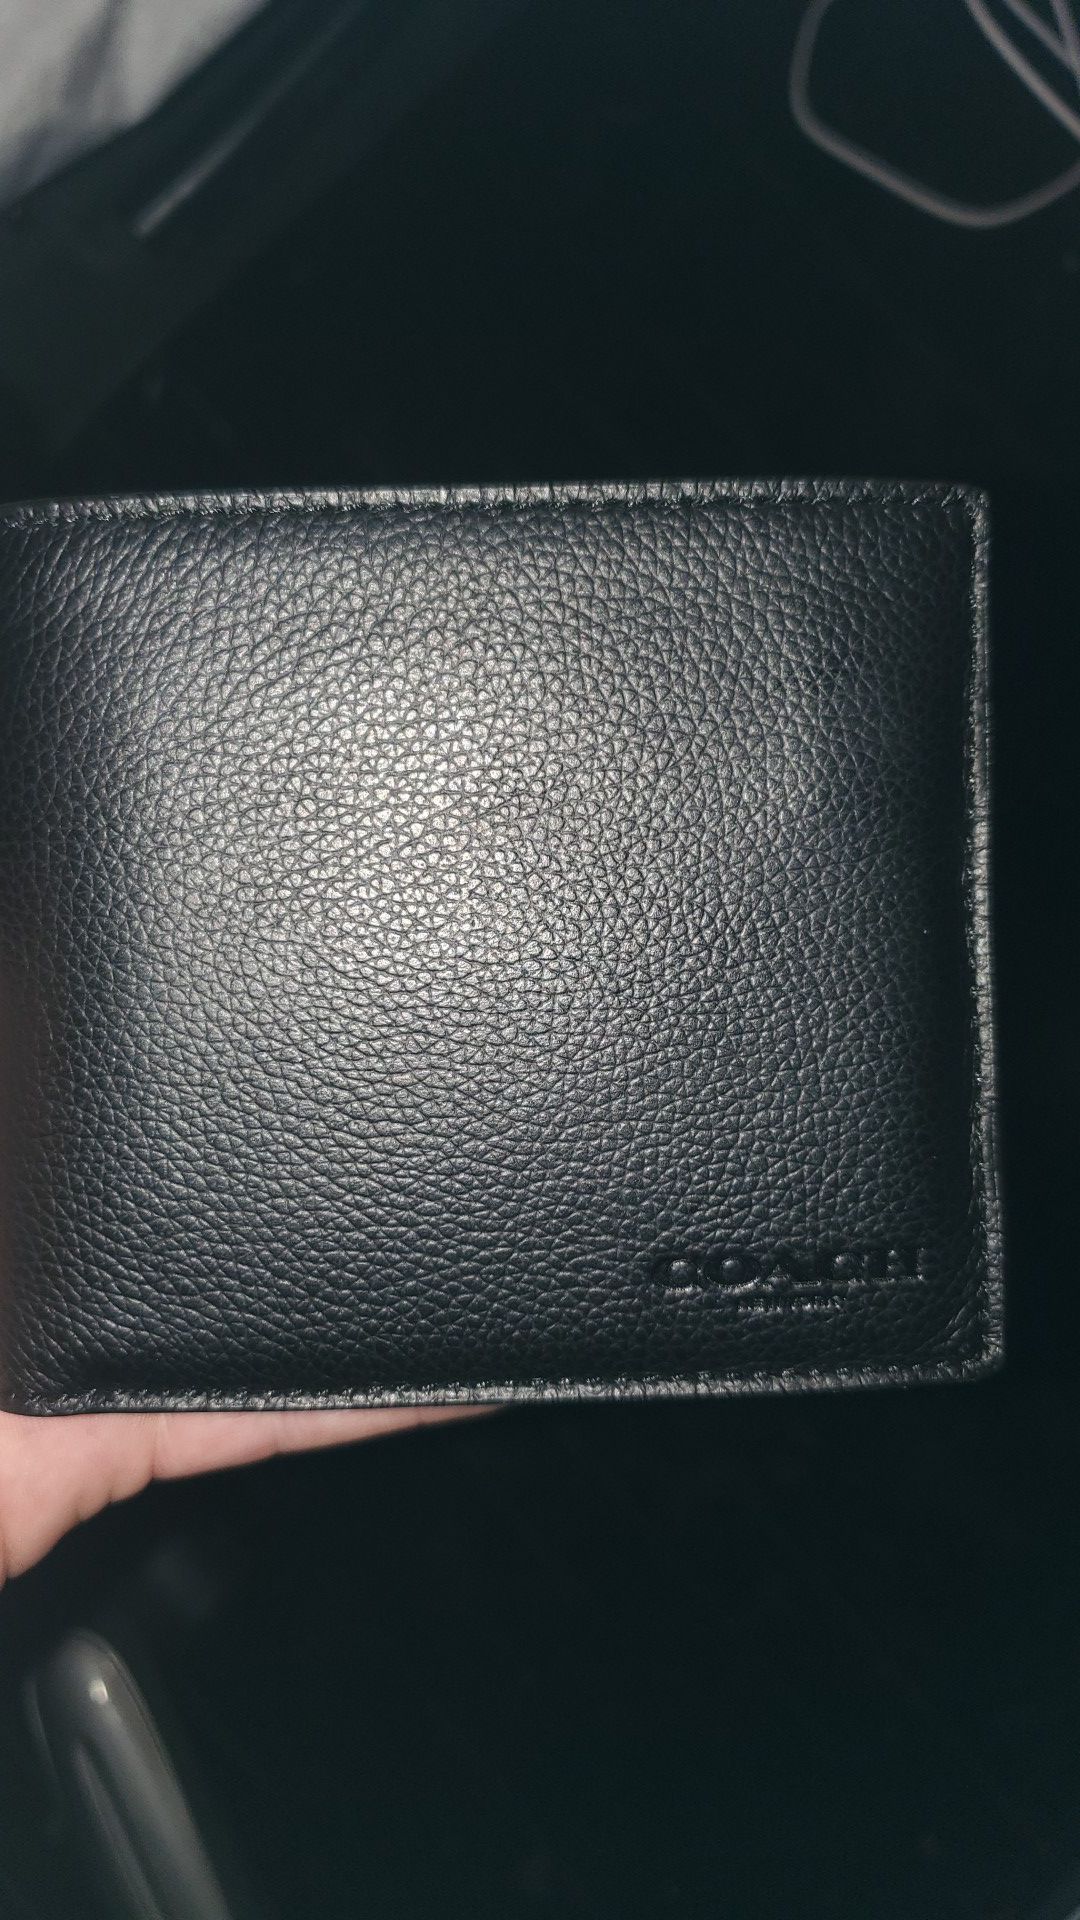 Coach wallet for men